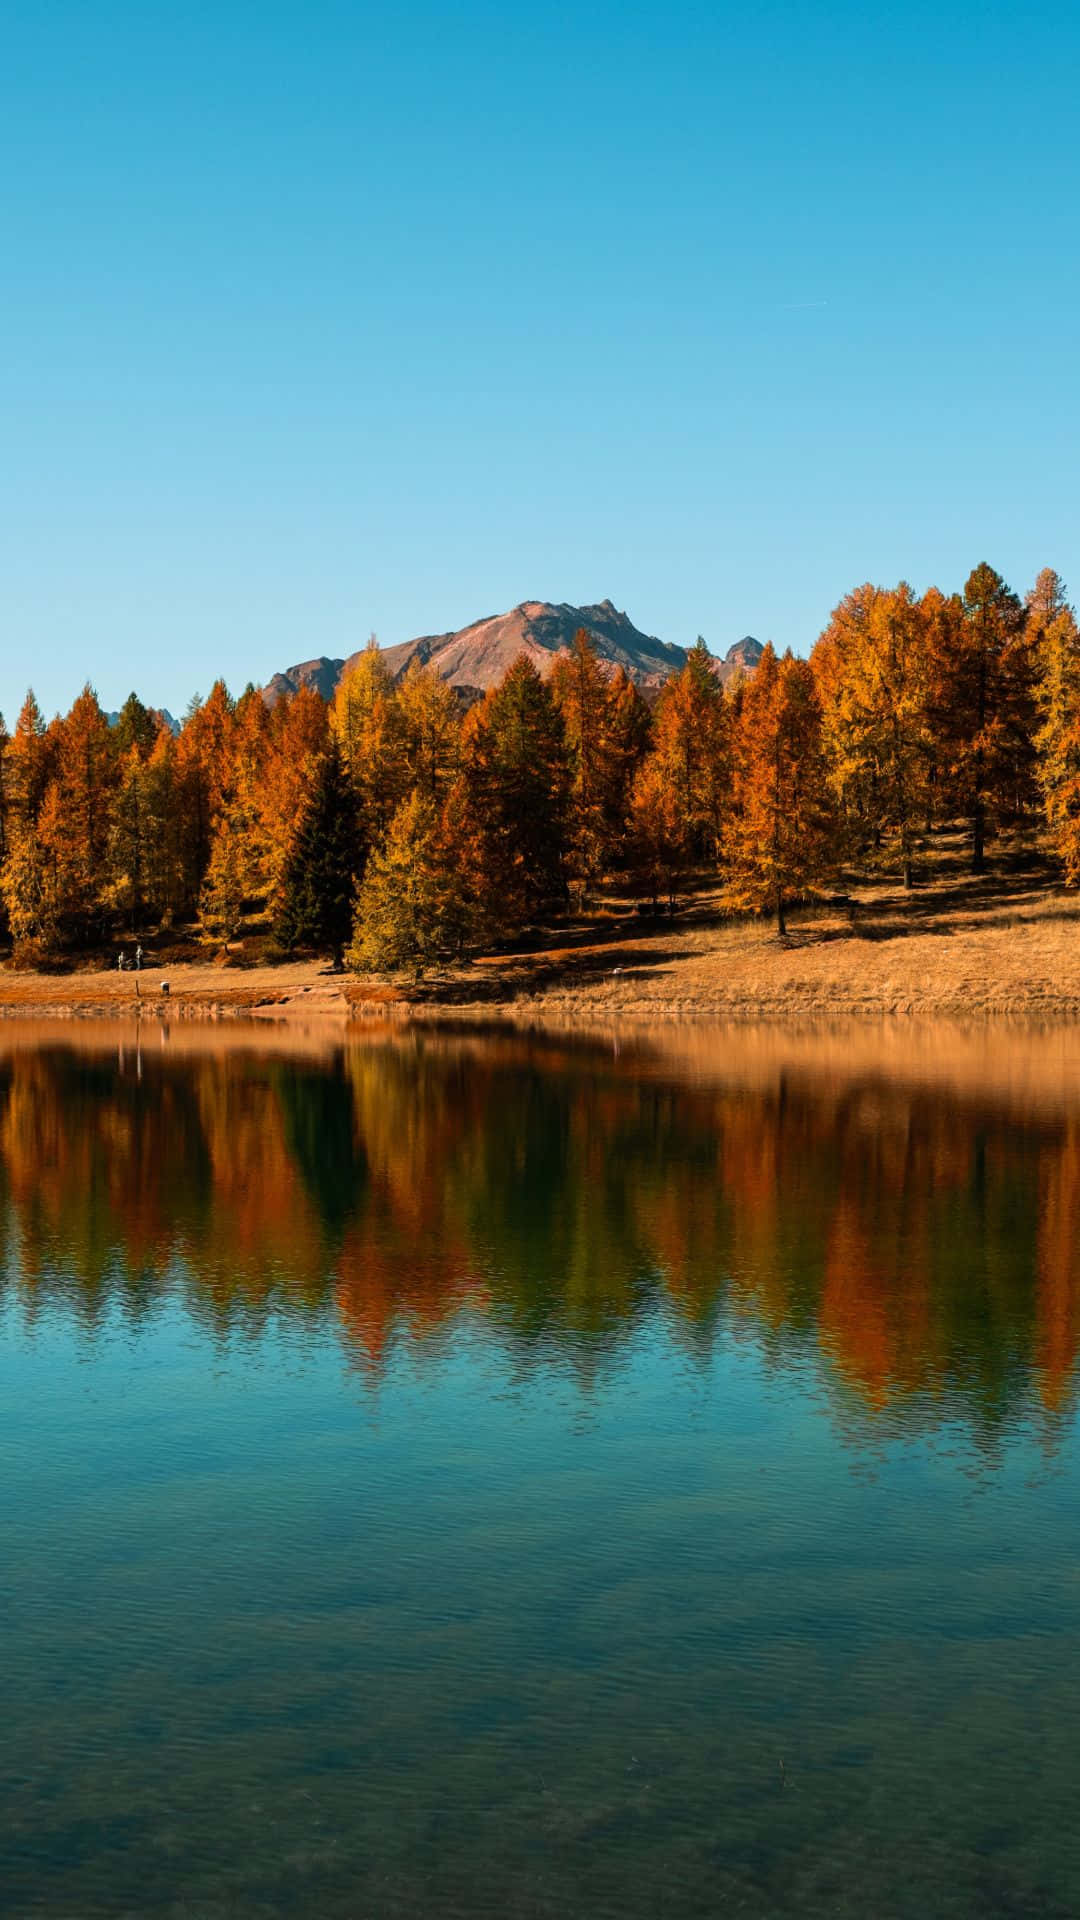 Caption: Serene Fall Lake - Discover the beauty of changing seasons at Fall Lake! Wallpaper